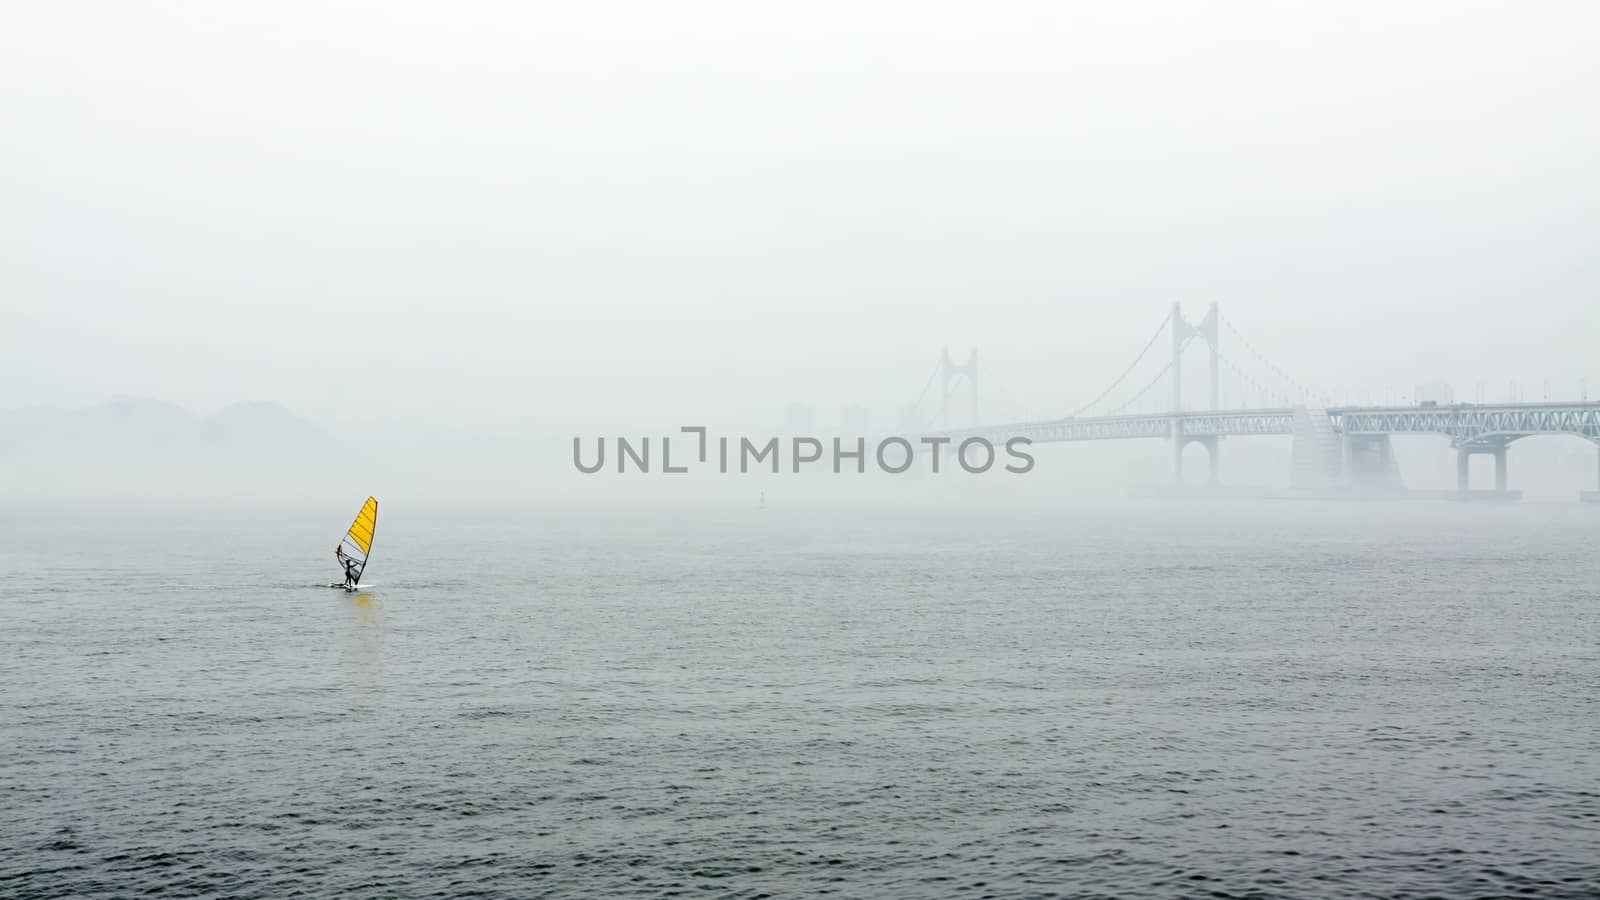 Misty landscape with river, bridge and windsurfer by dsmsoft